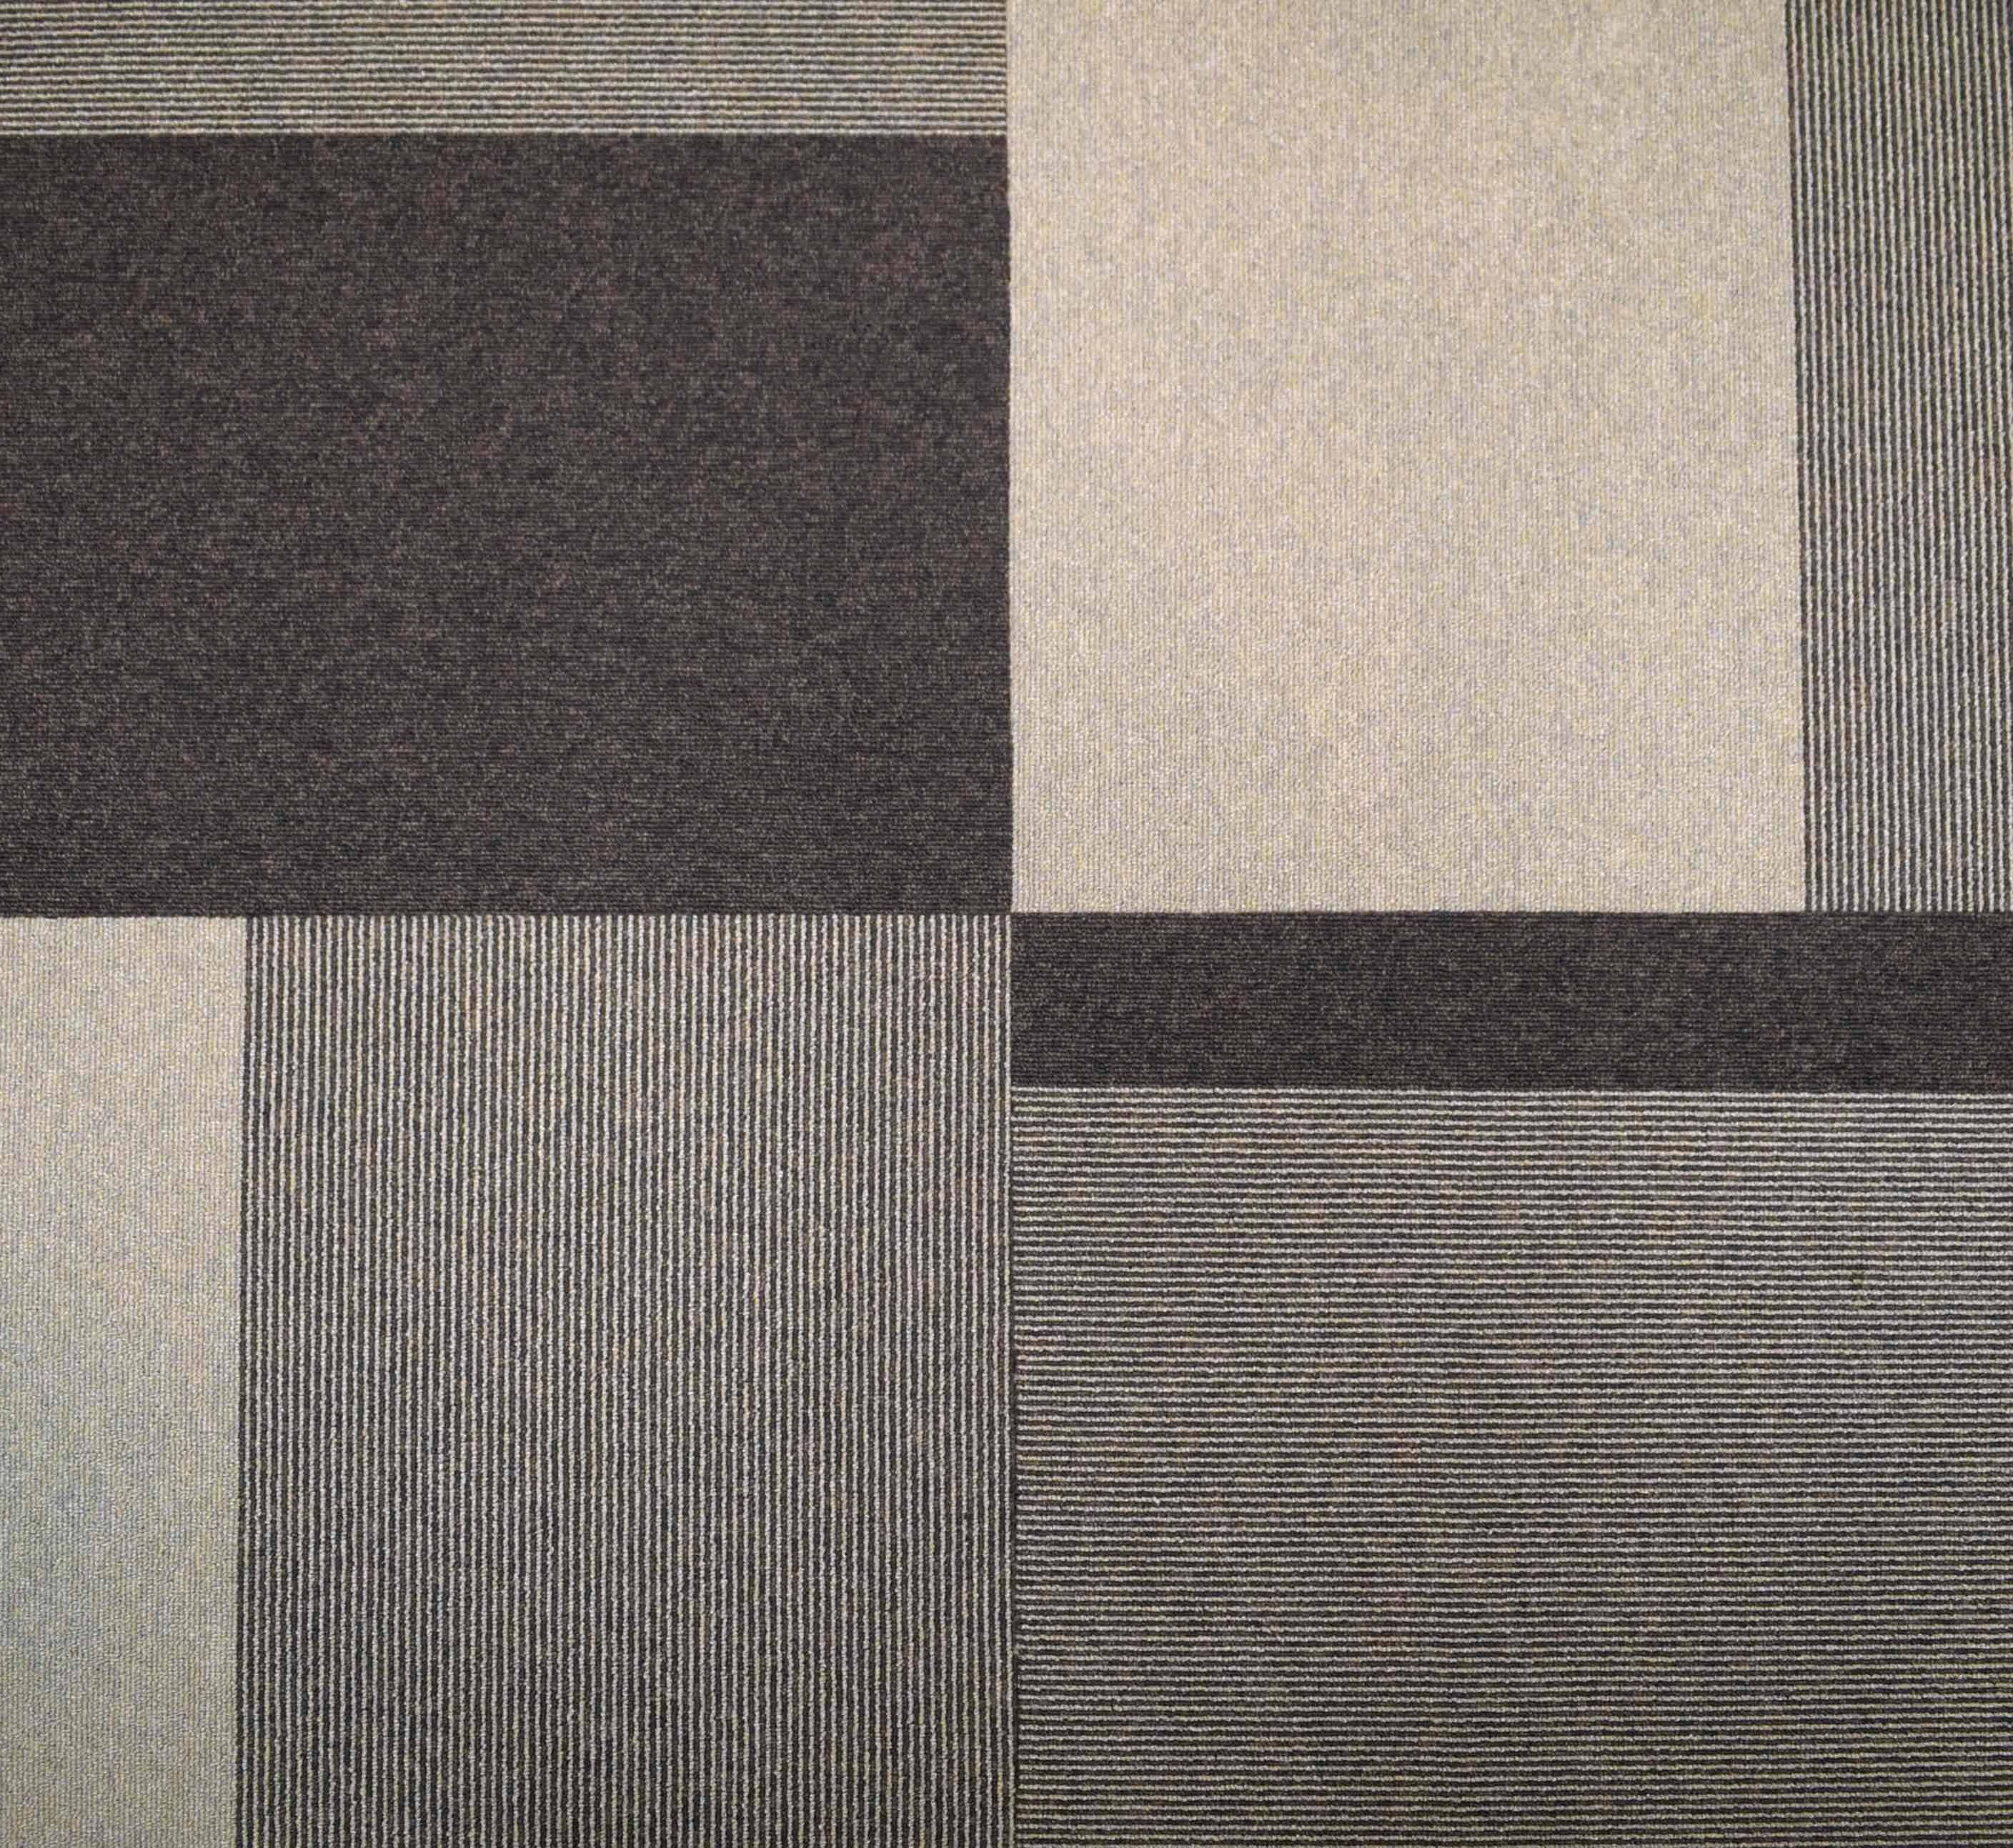 Paragon Total Contrast Carpet Tile Cracked Sapling